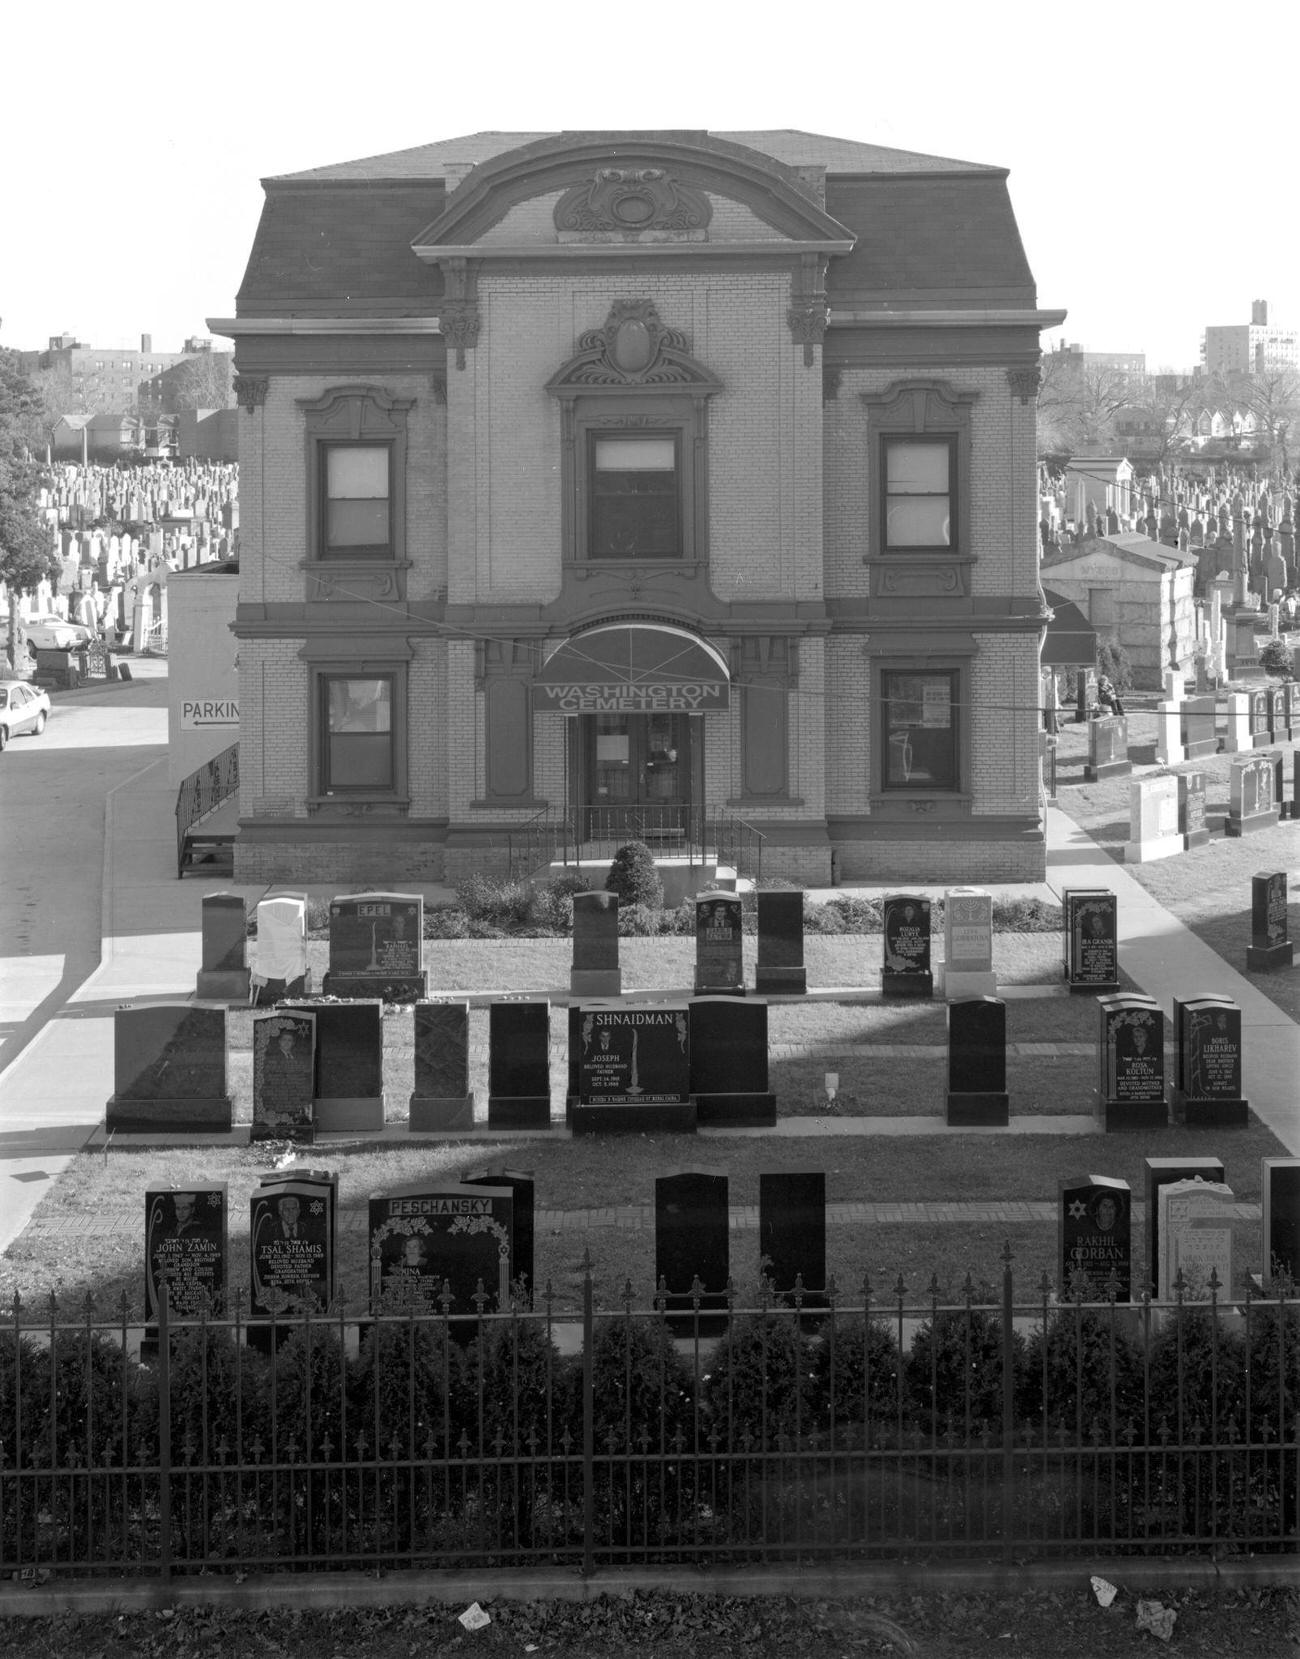 Washington Cemetery Building Seen From Train Platform In Brooklyn, 1992